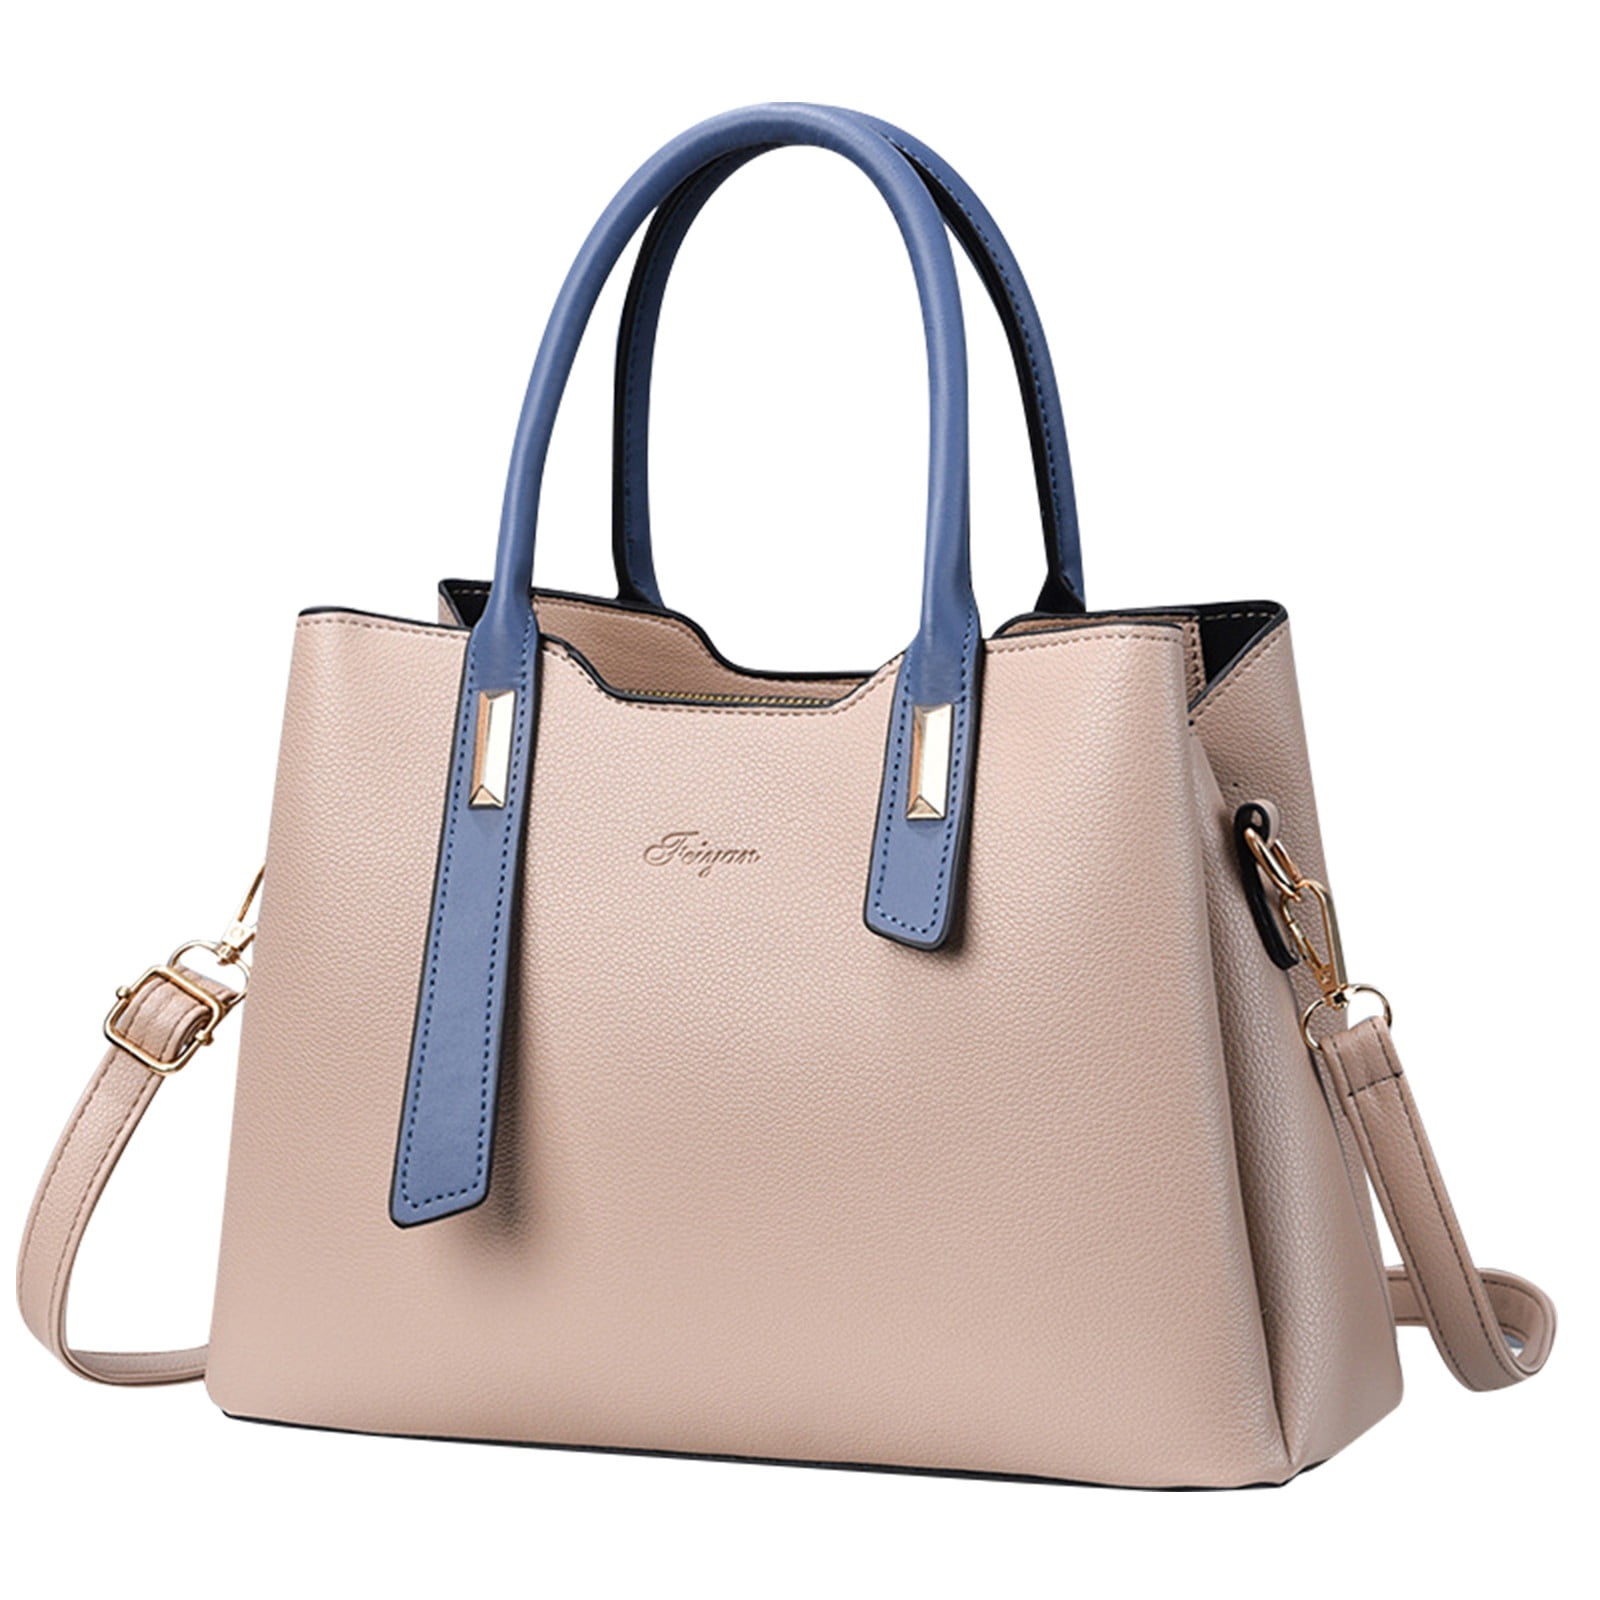 Handbag Express Black Rhinestone new with tags women's ladies purse hand bag  | eBay